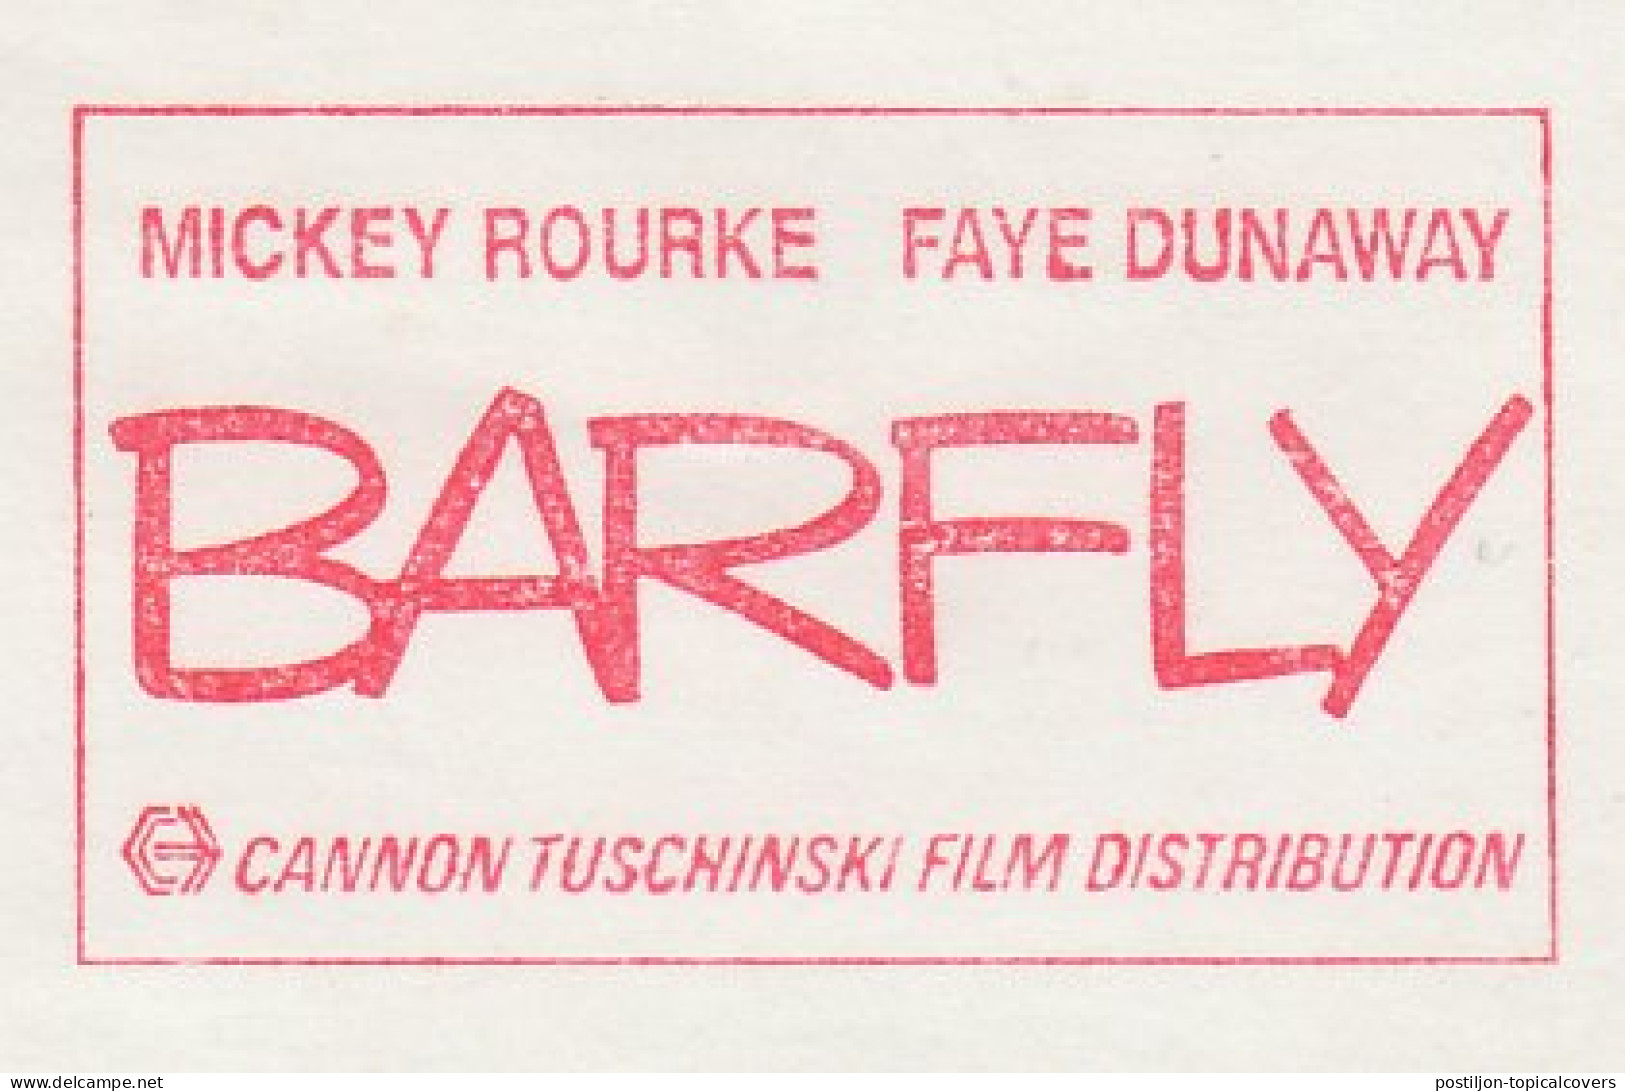 Meter Cut Netherlands 1988 Barfly - Movie - Film